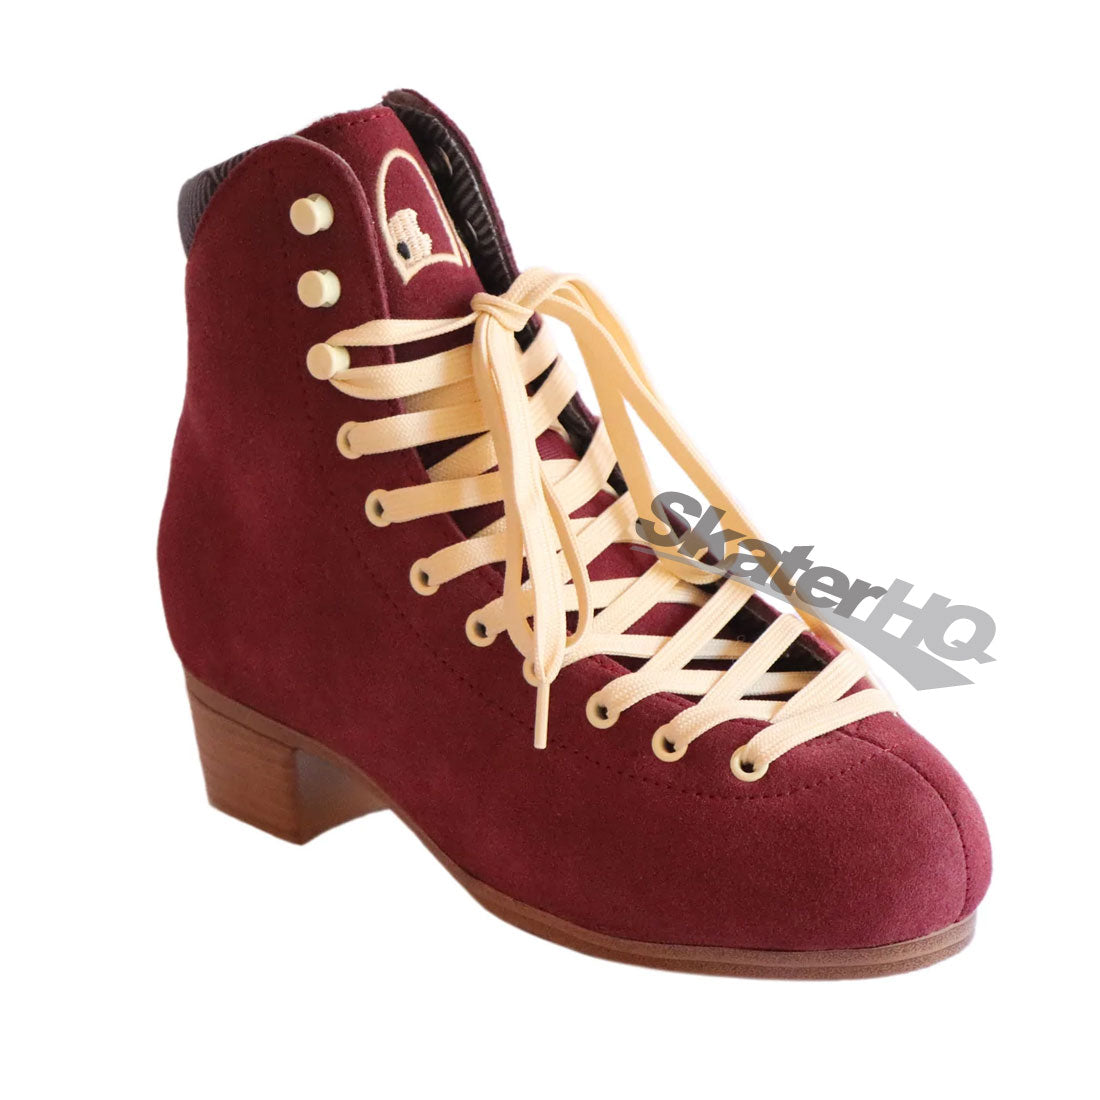 Chuffed Boot - Burgundy Roller Skate Boots